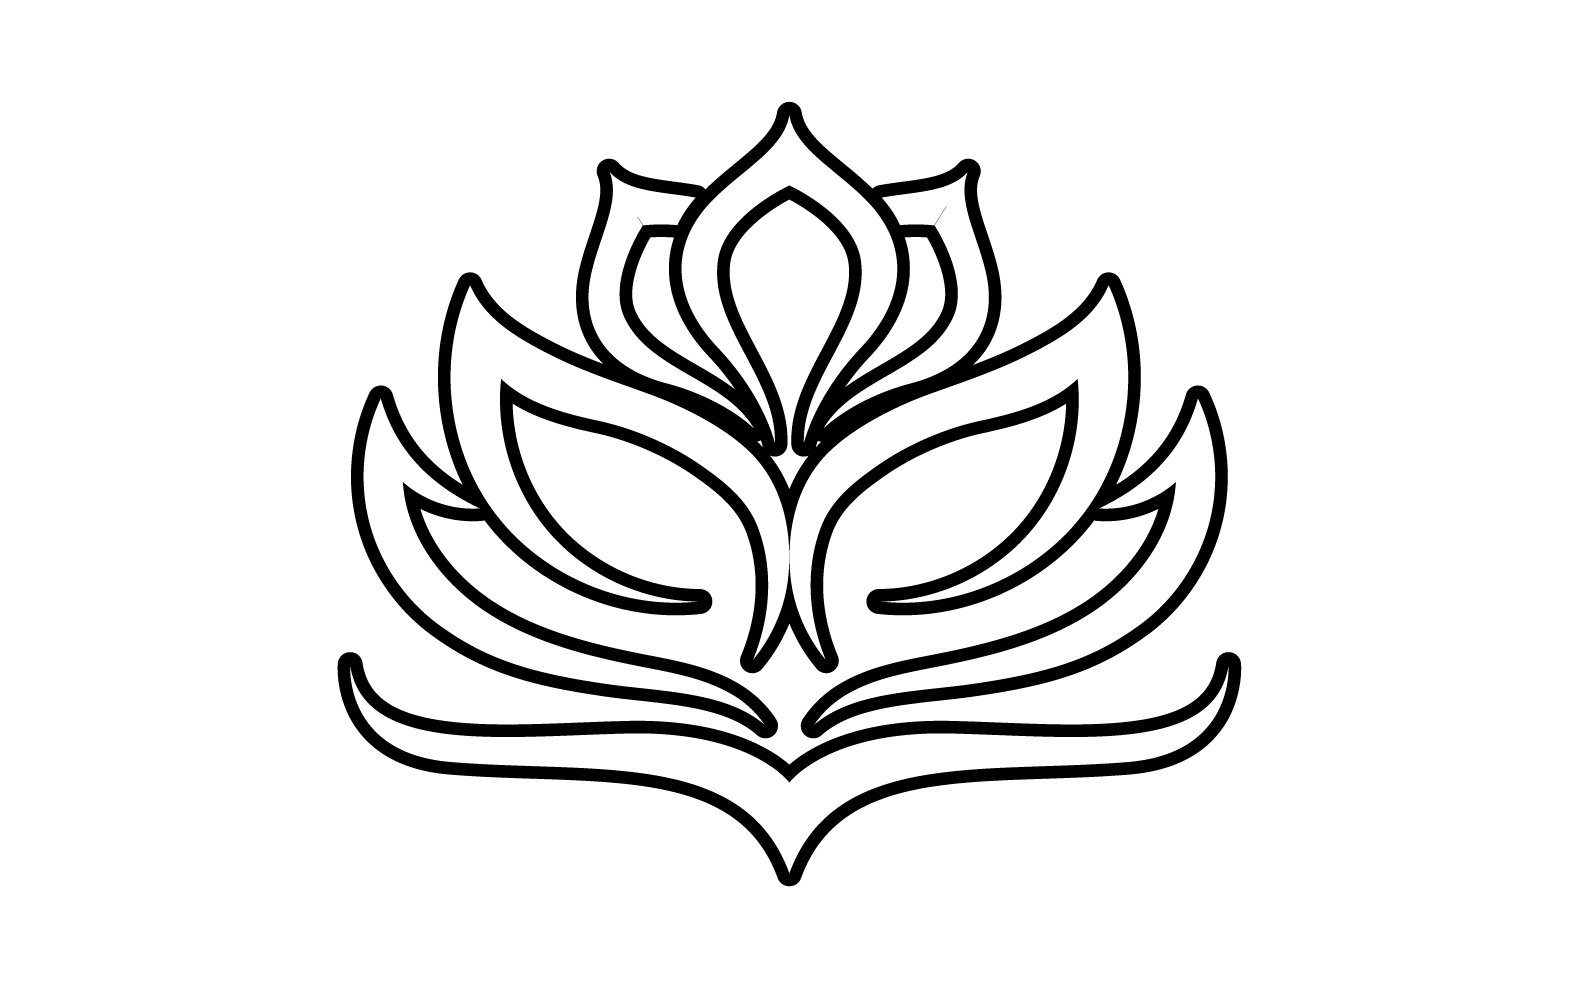 Flower lotus yoga symbol vector design company name v59